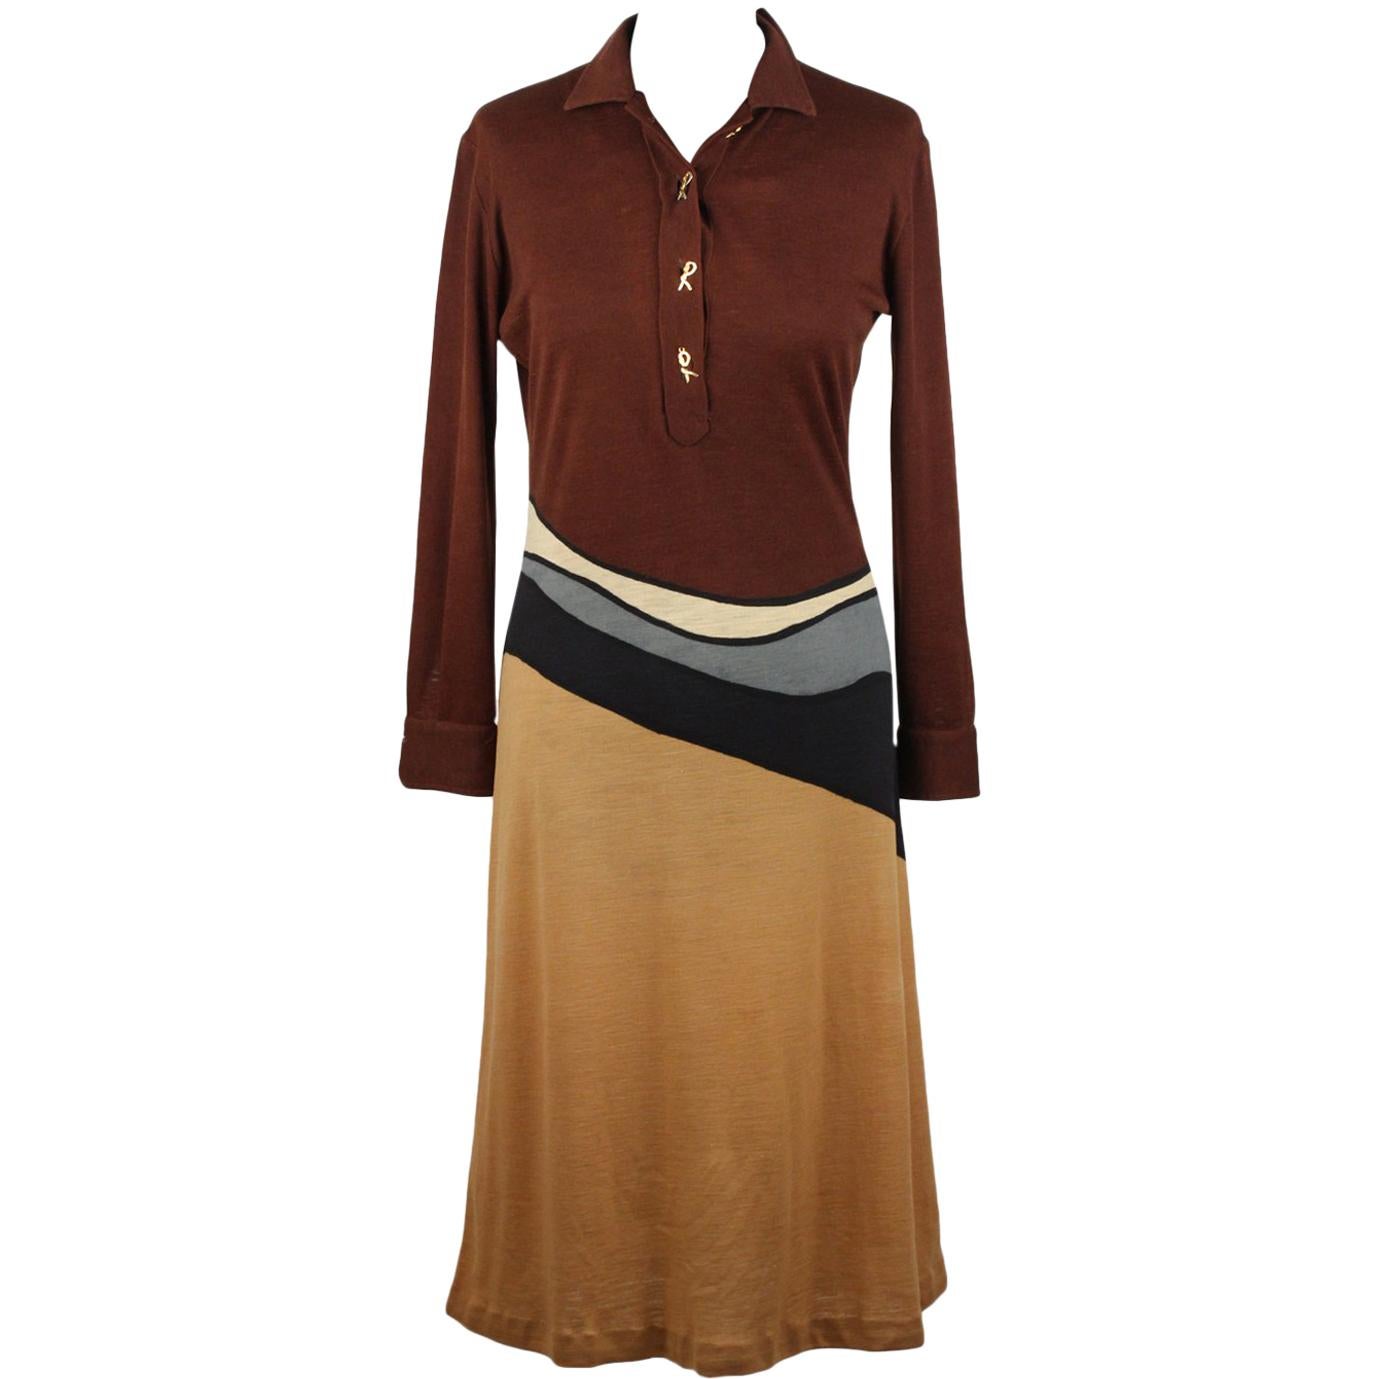 Roberta Di Camerino Vintage Brown Long Sleeve Dress Size 46